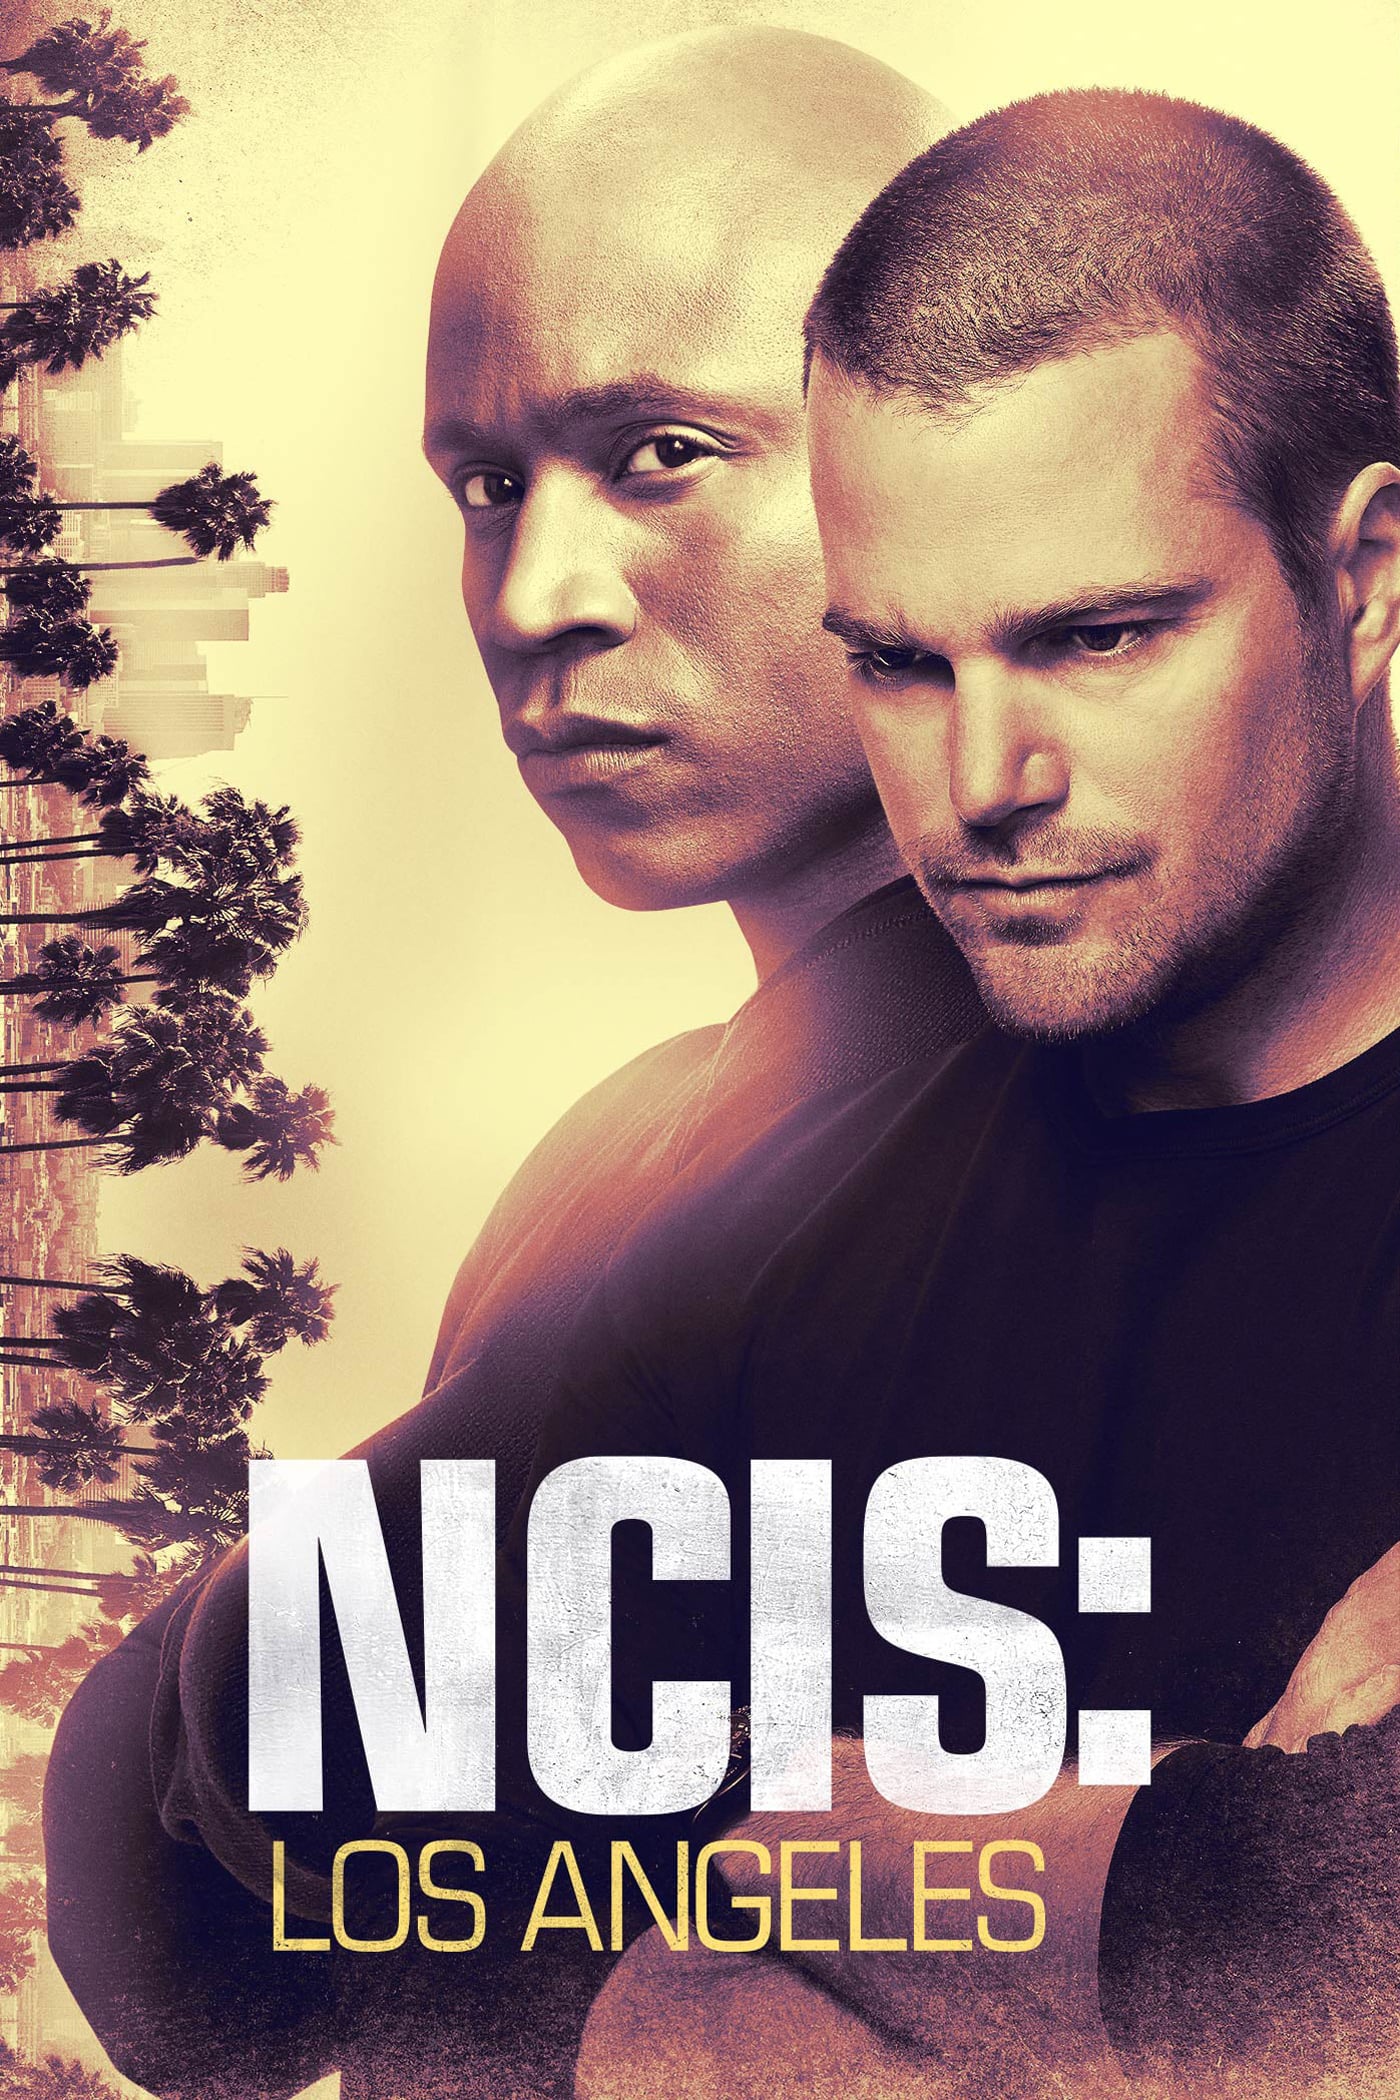 ncis season 1 download 480p